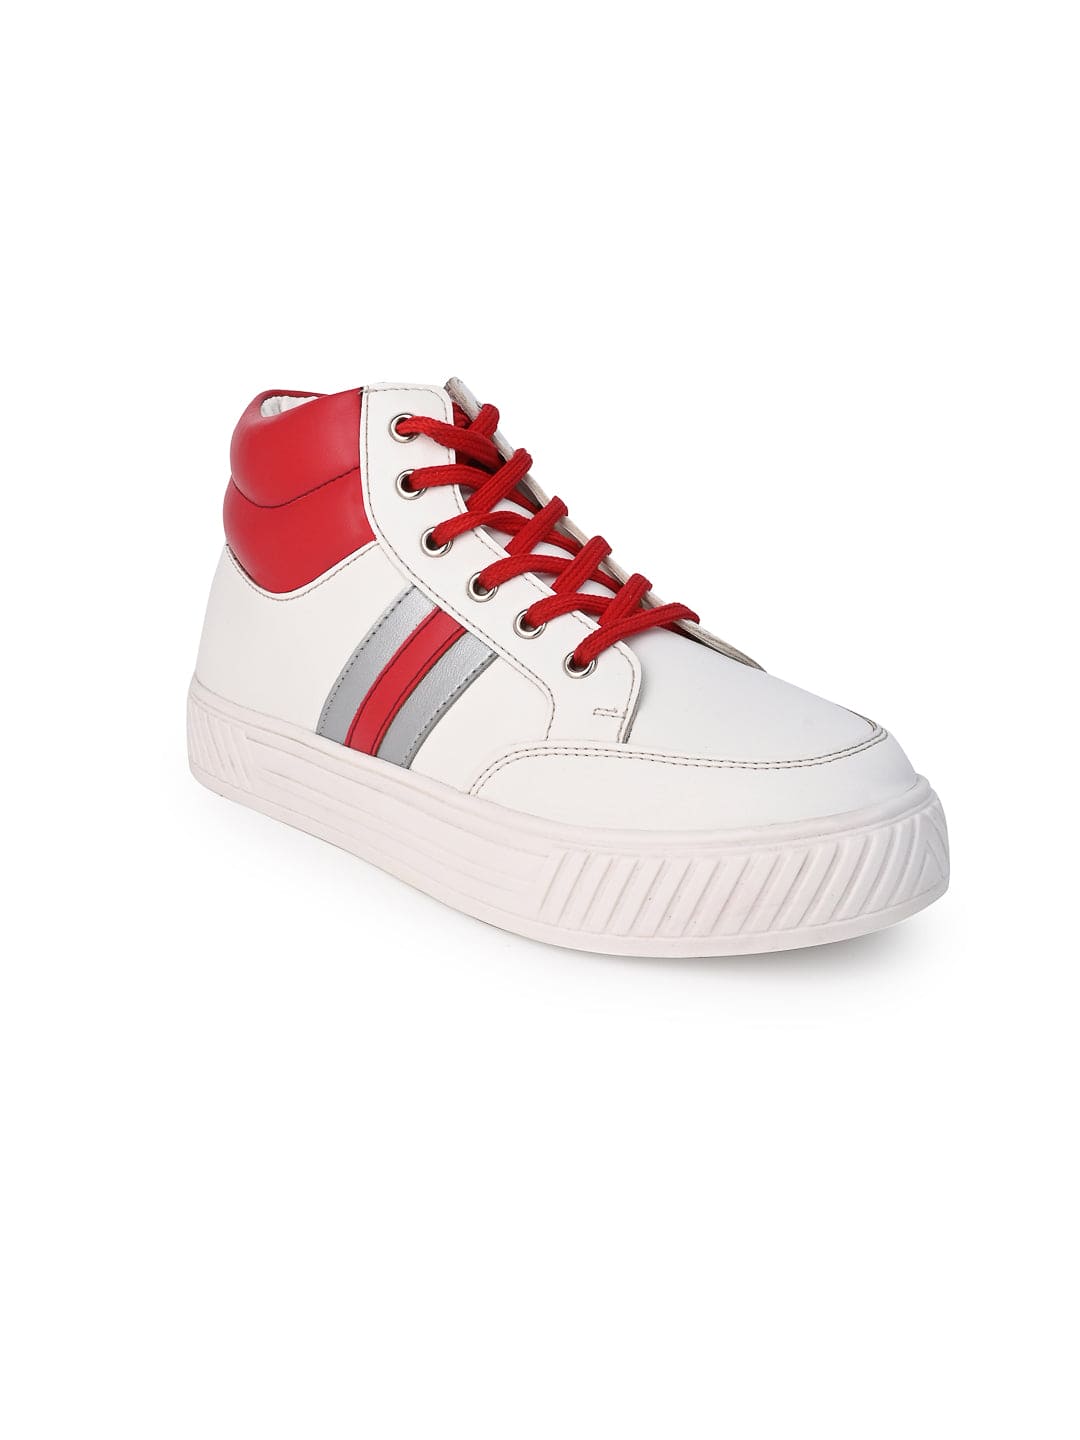 Esmee Urban Step Sneakers for Women - Red